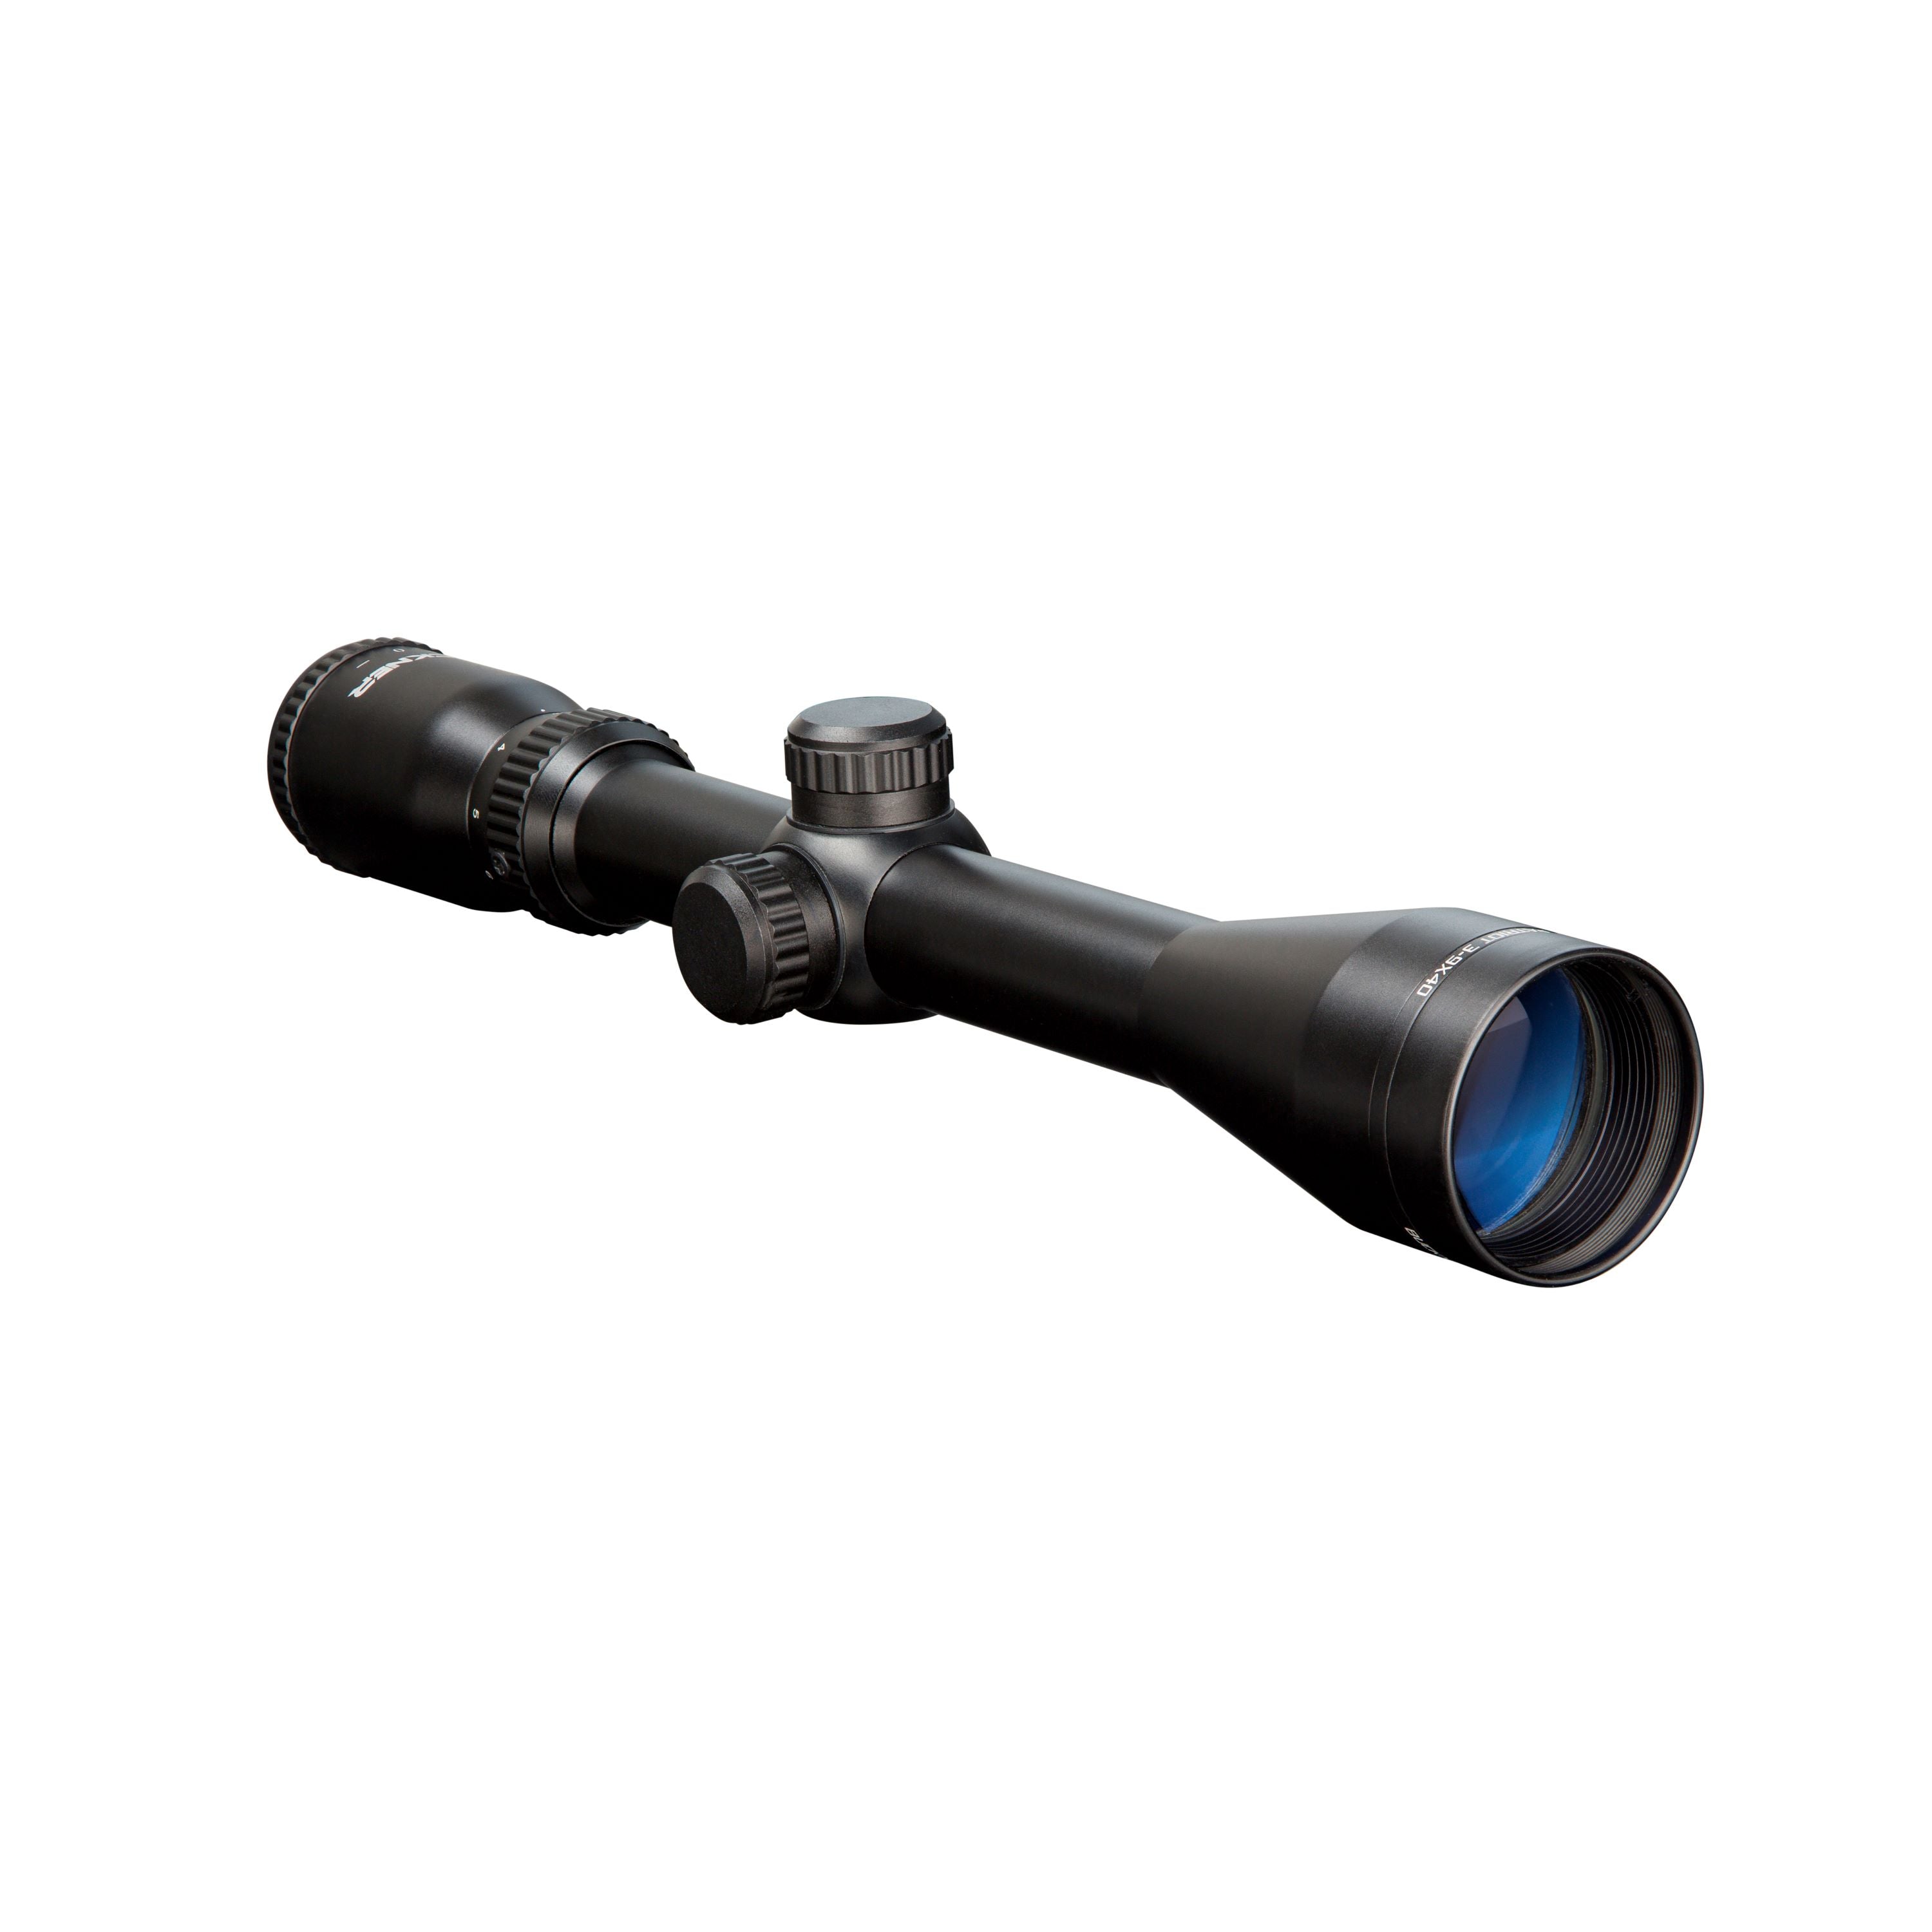 "Patriot" 3-9X40 scope